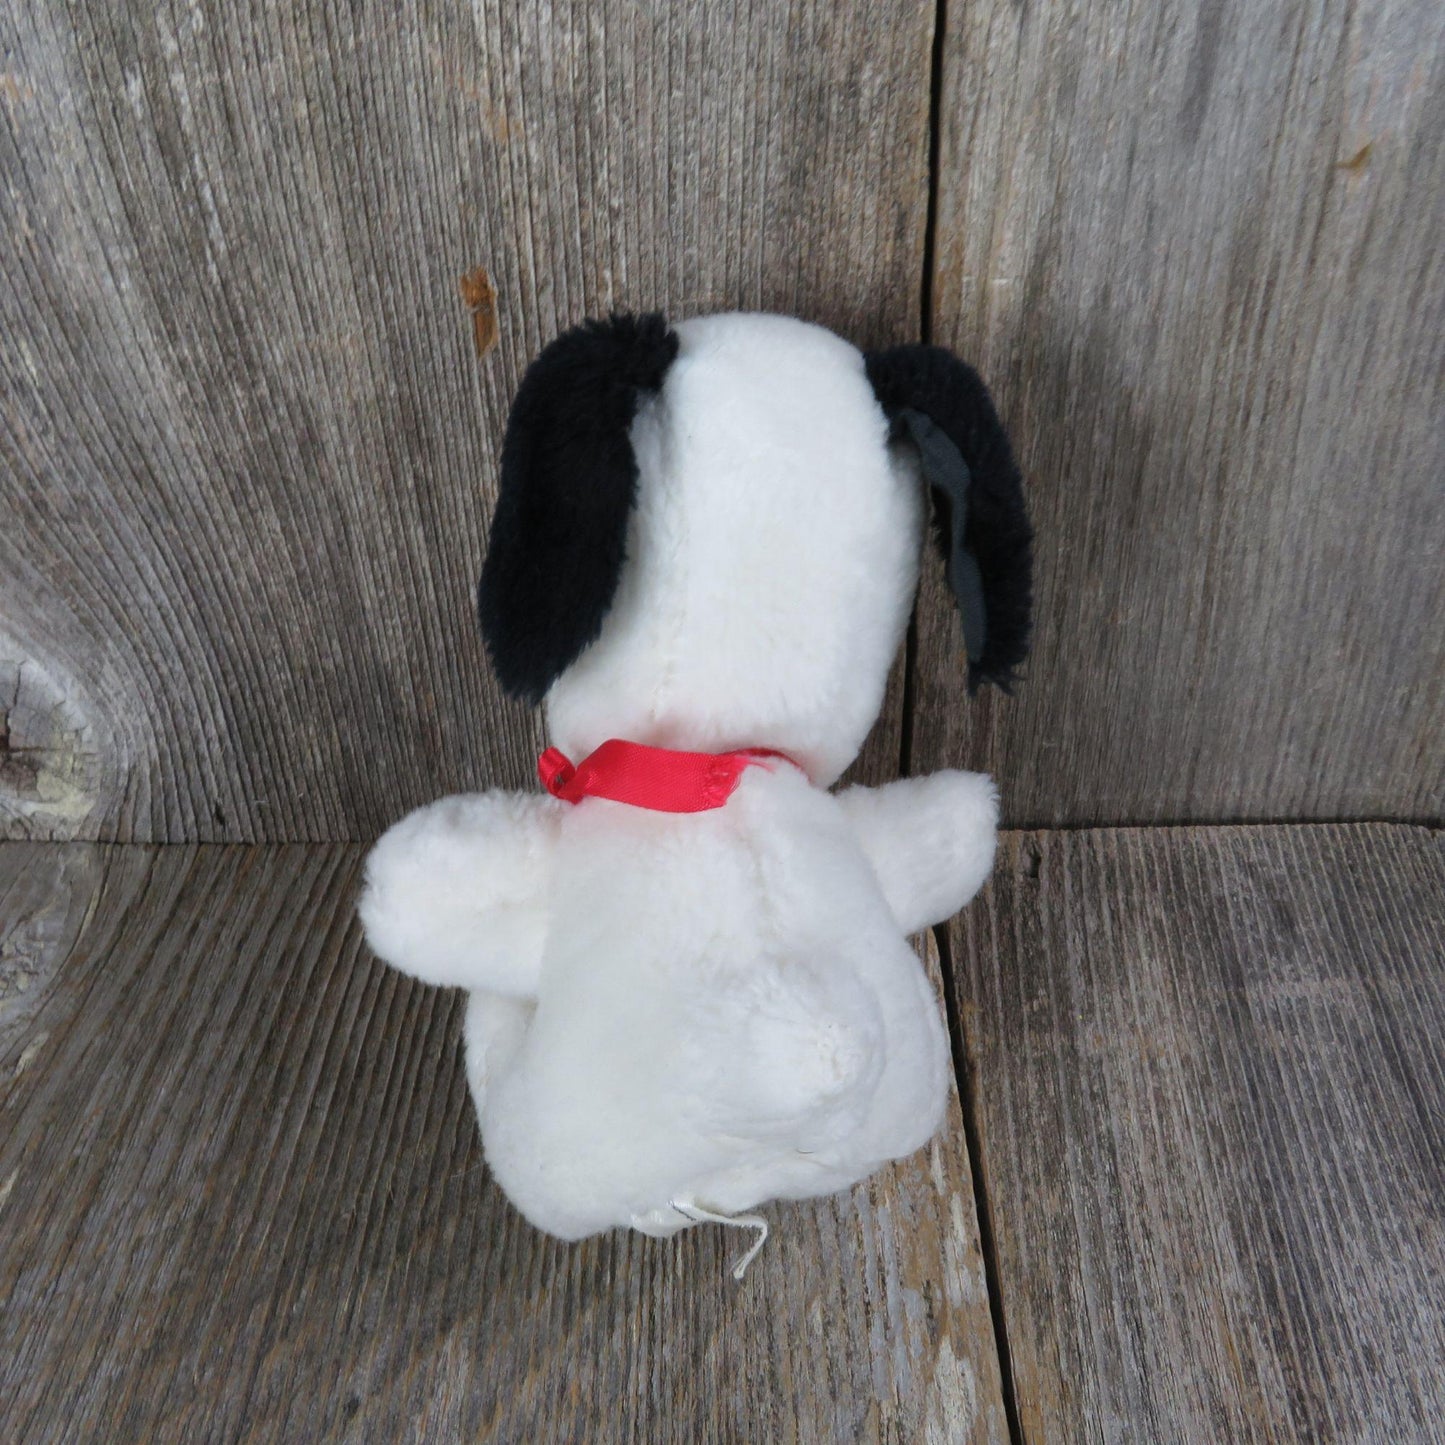 Vintage Snoopy Plush Small White Black Dog Charlie Brown Puppy Stuffed Animal Nut Filled 1968 Korea